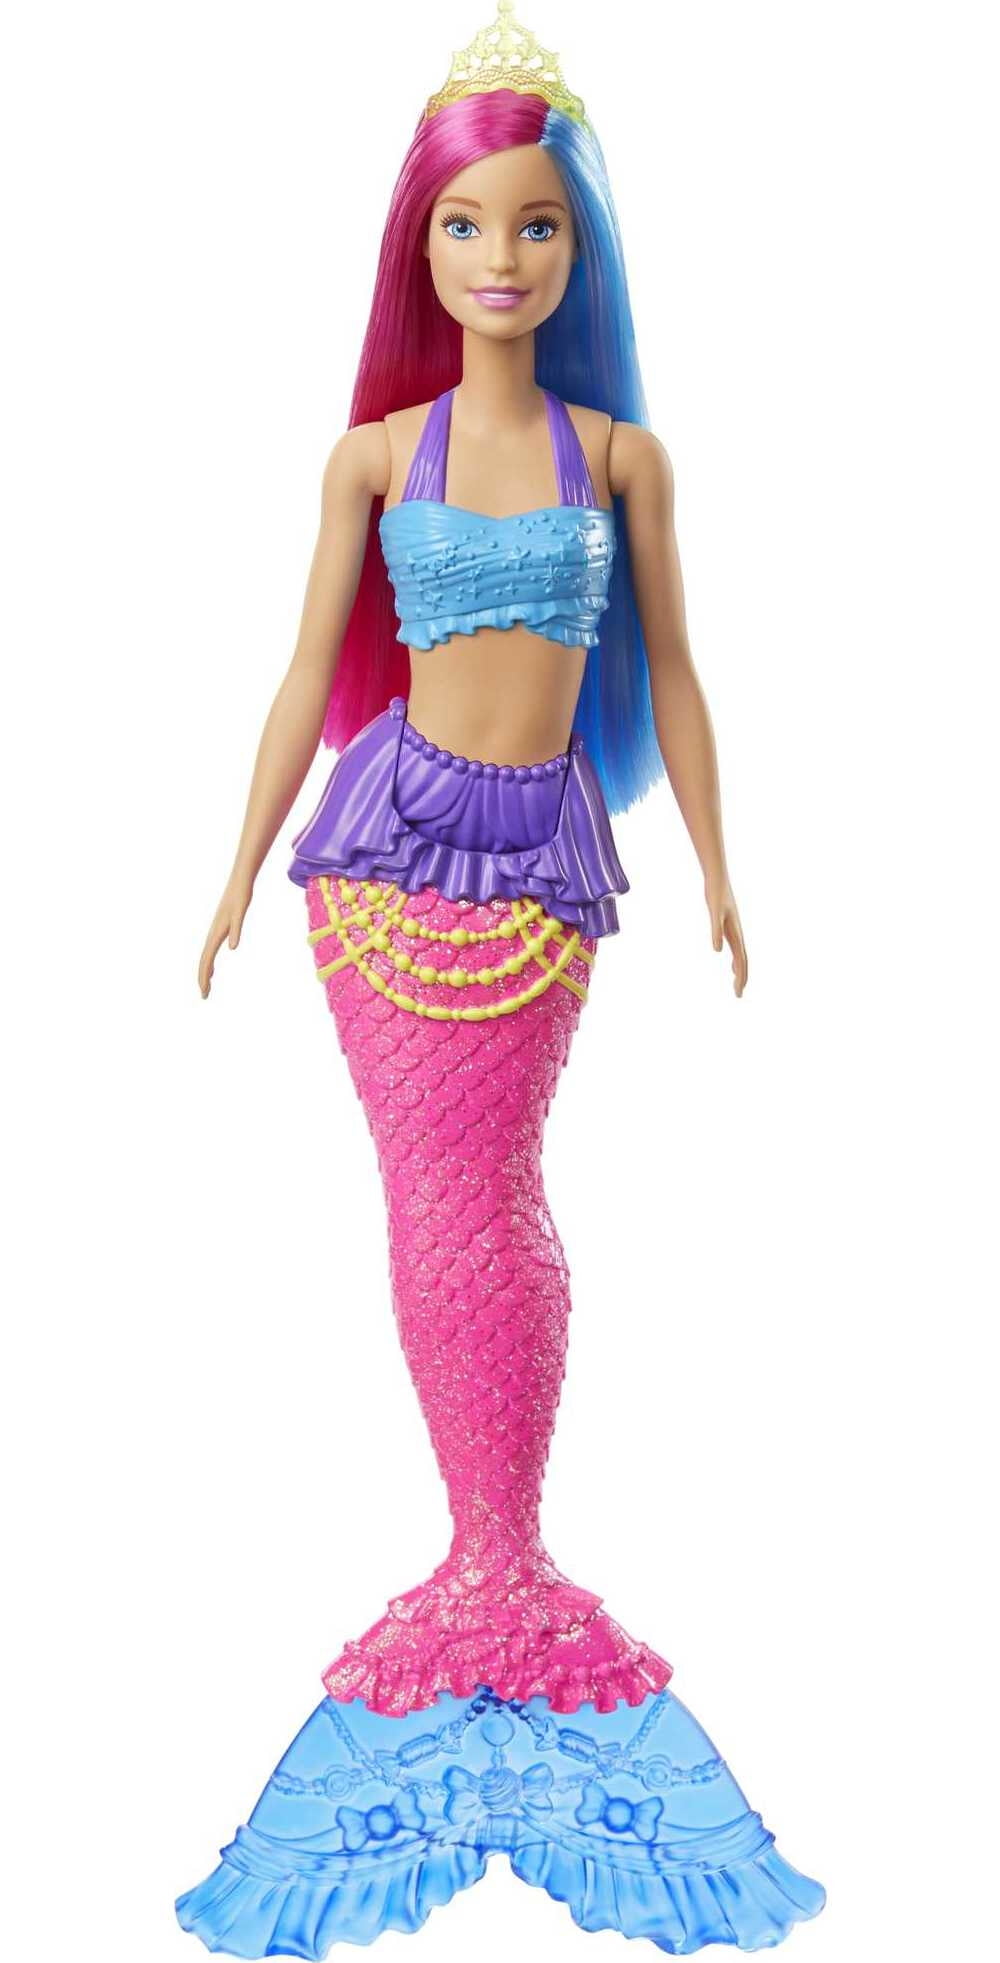 breakfast jewelry factor Barbie Dreamtopia Mermaid Doll, 12-Inch, Pink And Blue Hair - Walmart.com